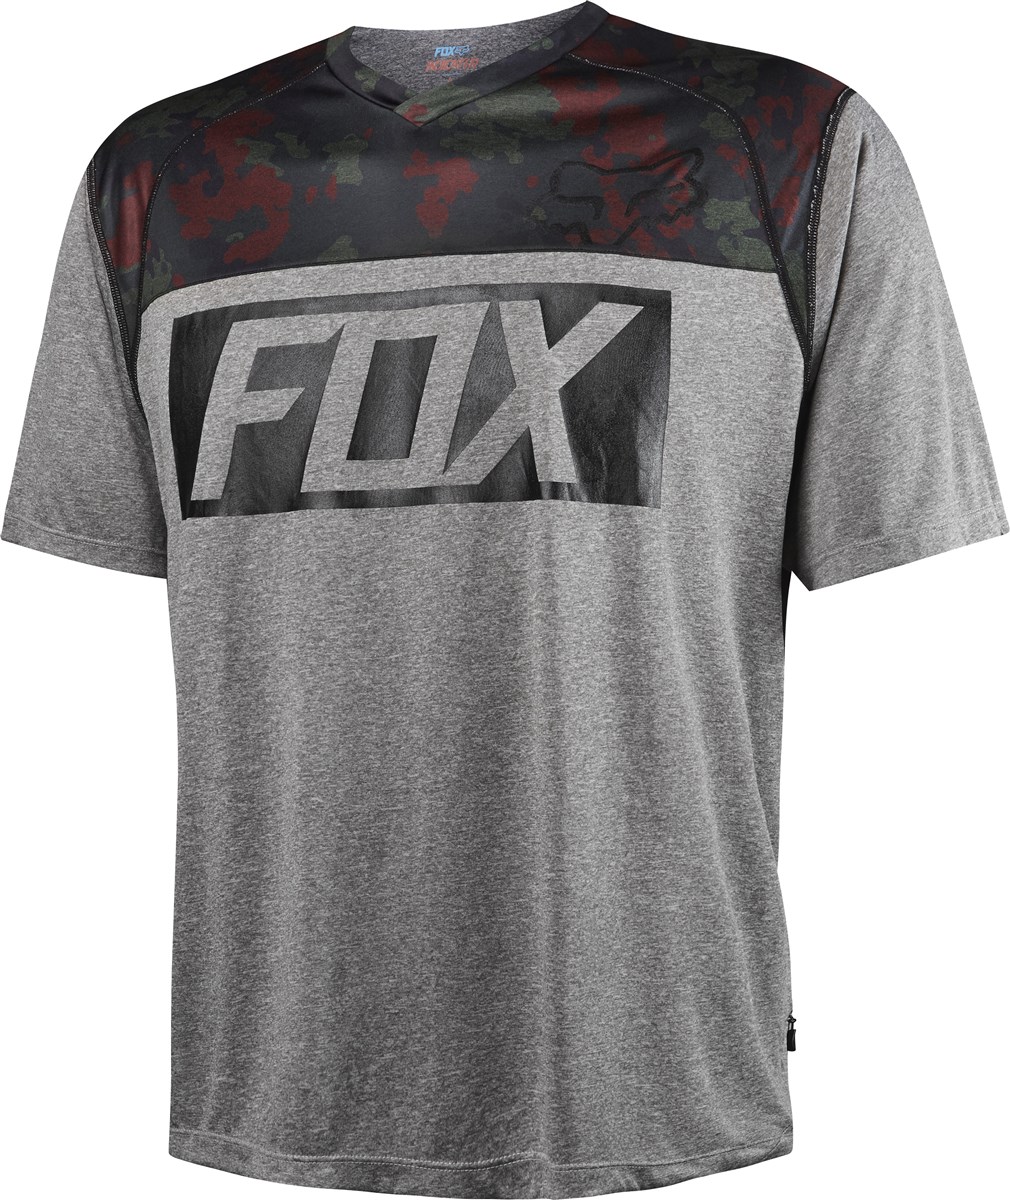 Fox Clothing Indicator Short Sleeve Jersey SS16 product image